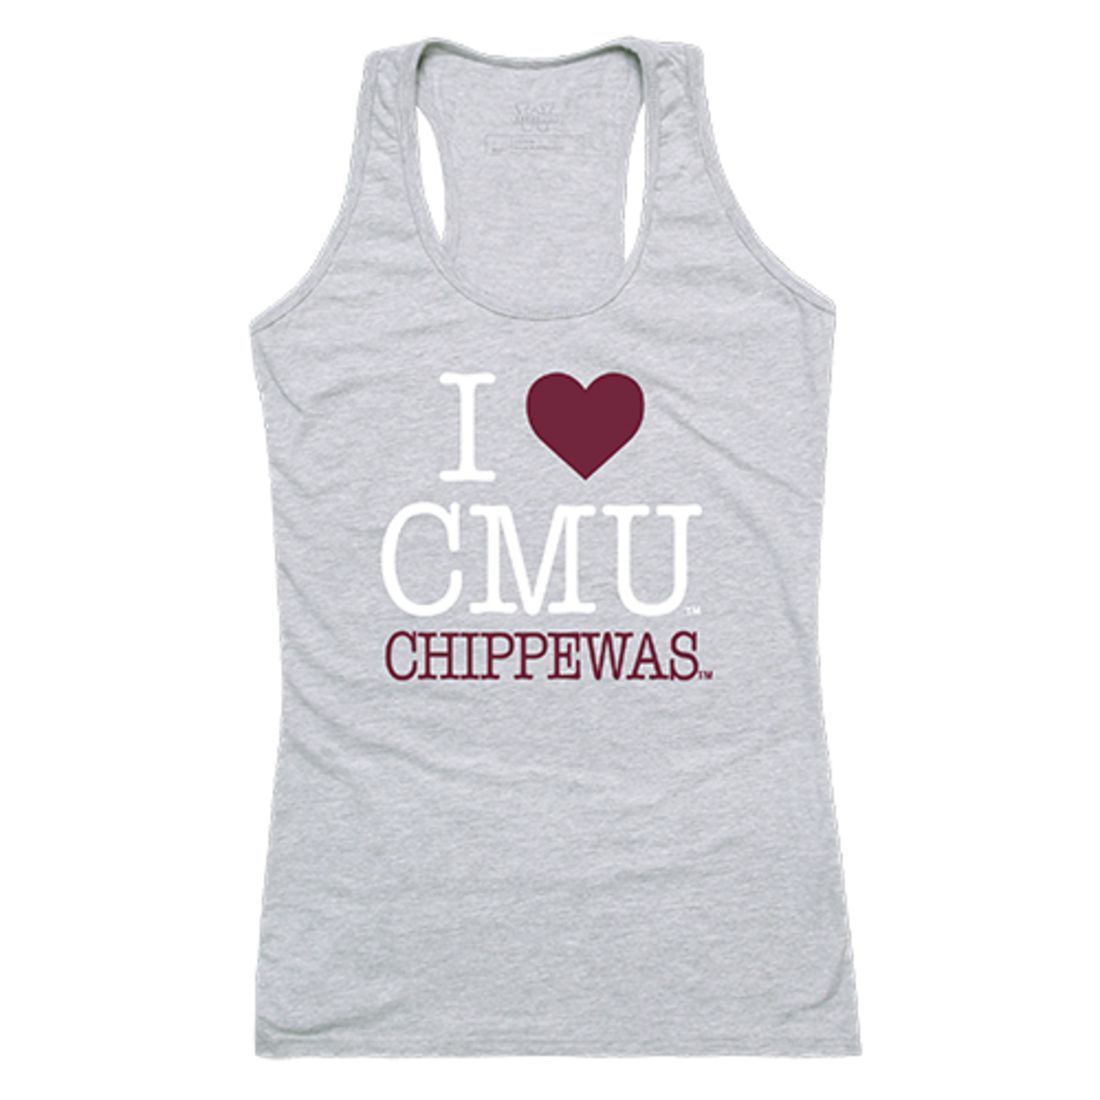 CMU Central Michigan University Chippewas Womens Love Tank Top Tee T-Shirt Heather Grey-Campus-Wardrobe